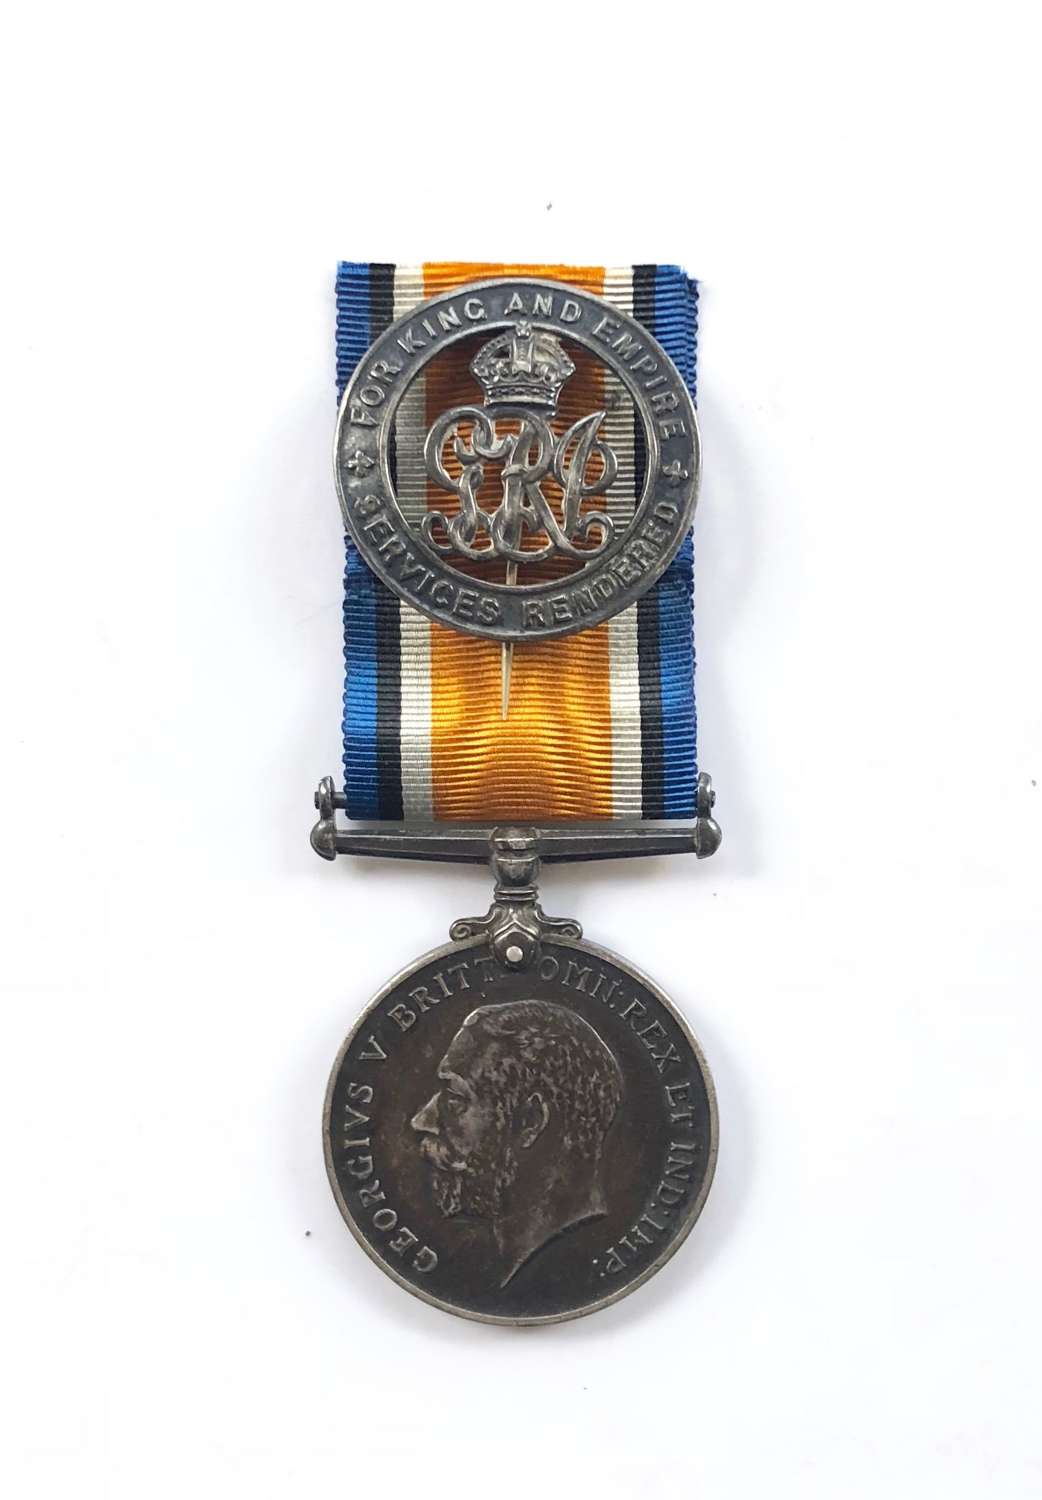 WW1 Rifle Brigade Medal and Silver War Badge.